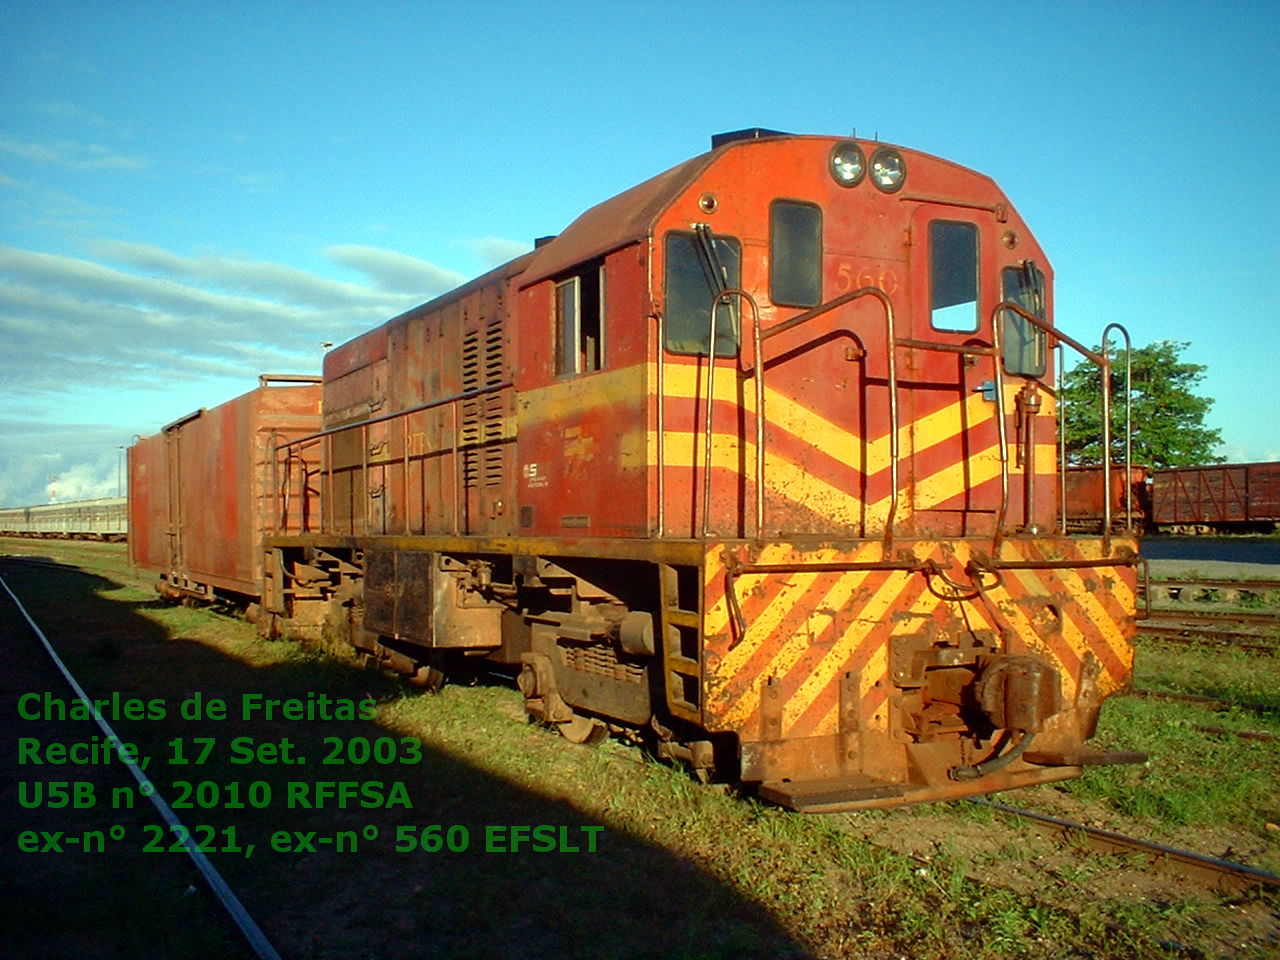 Locomotiva U5B nº 2010 RFFSA, ex-n° 2221, ex-nº 560 EFSLT